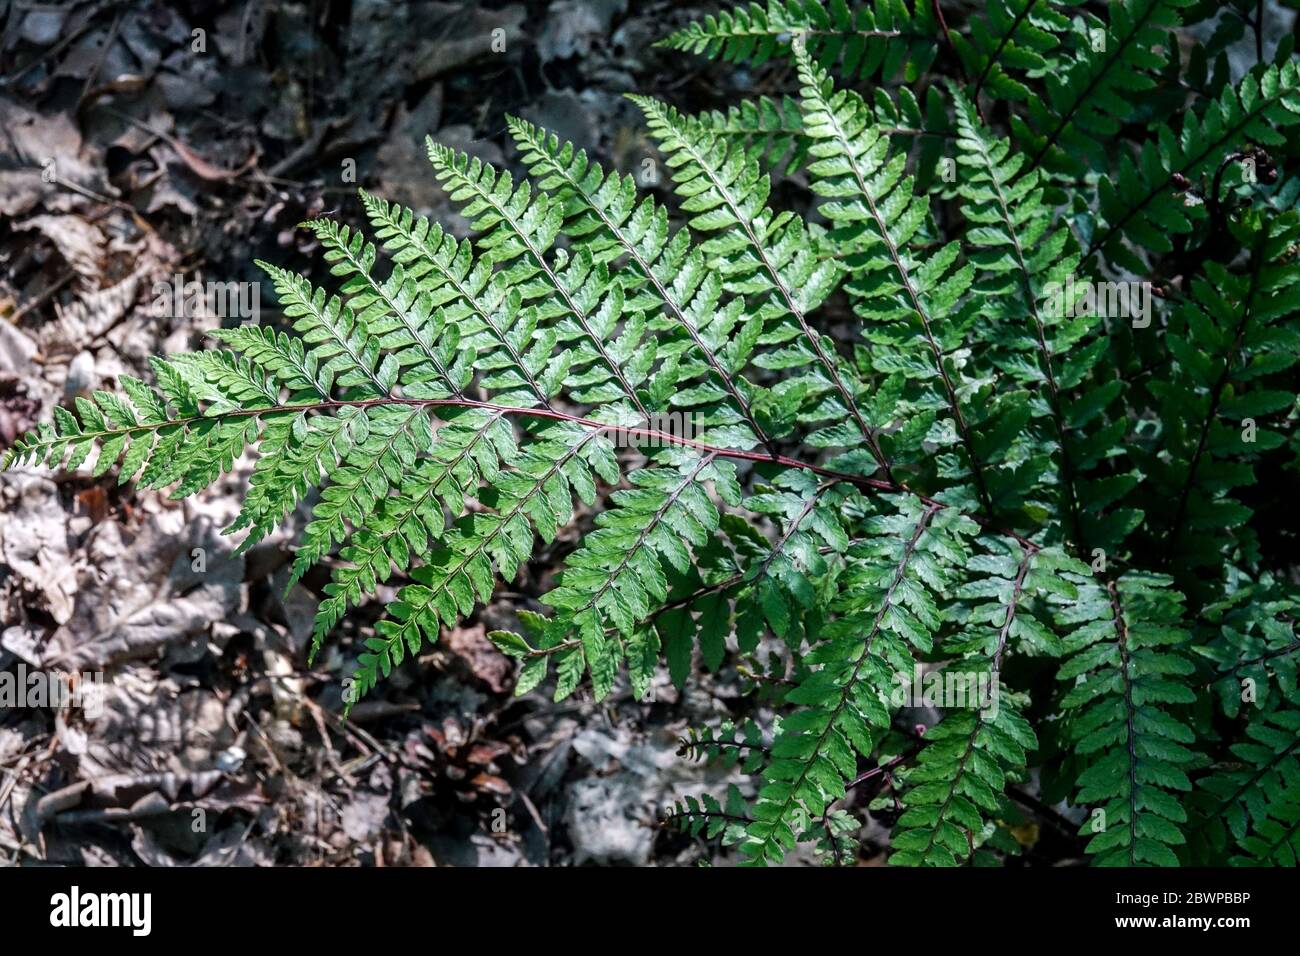 Eared lady fern, Athyrium otophorum 'Okanum' Stock Photo